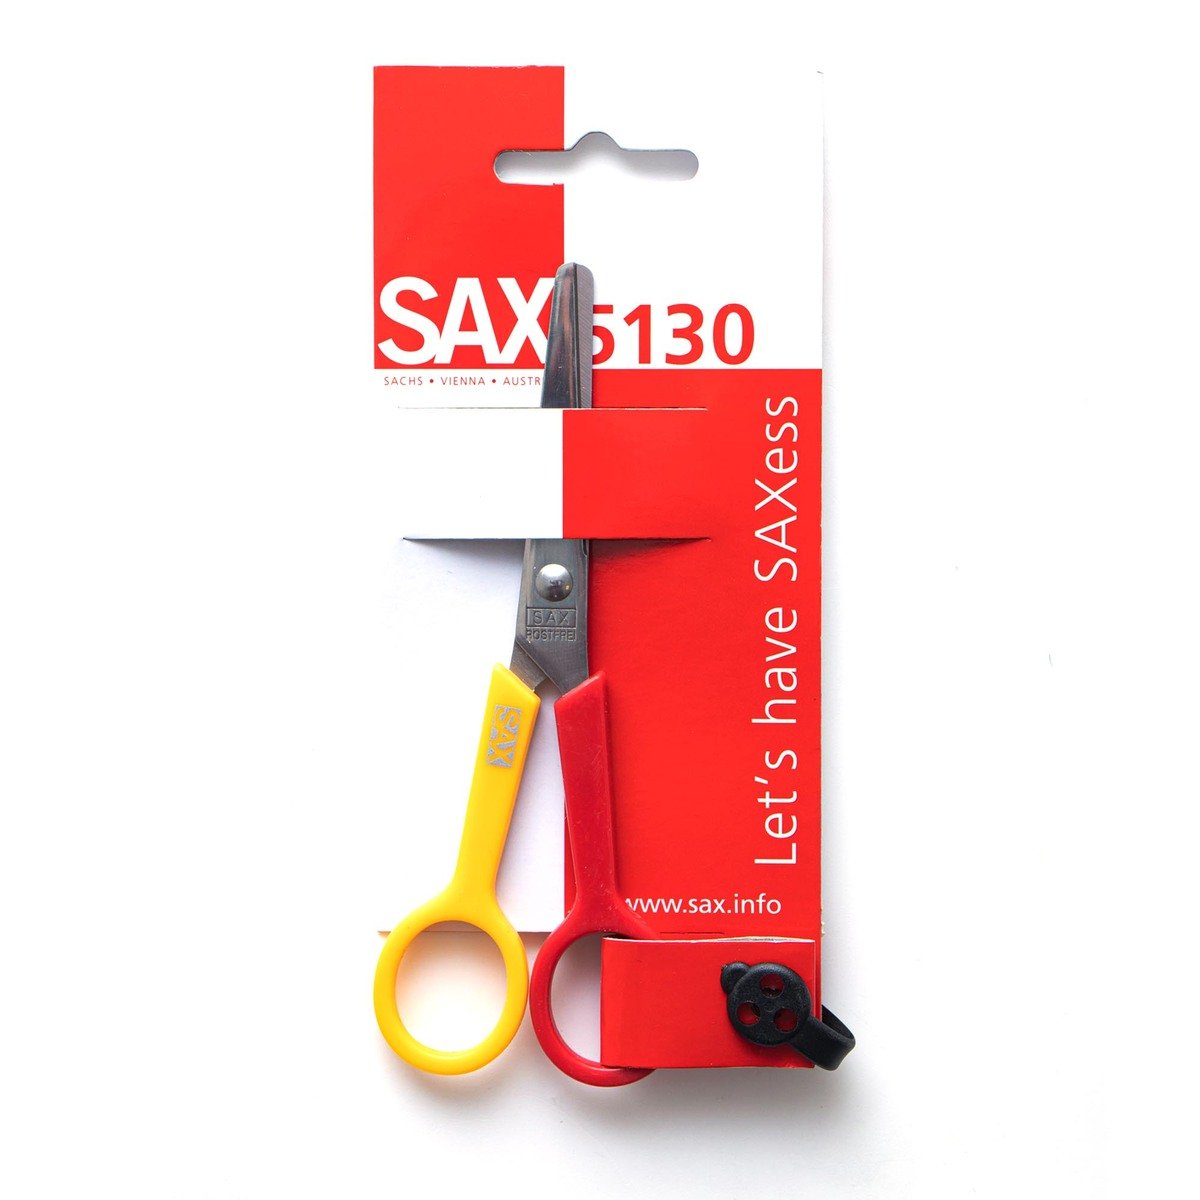 Sax Stainless Steel Scissors 5130